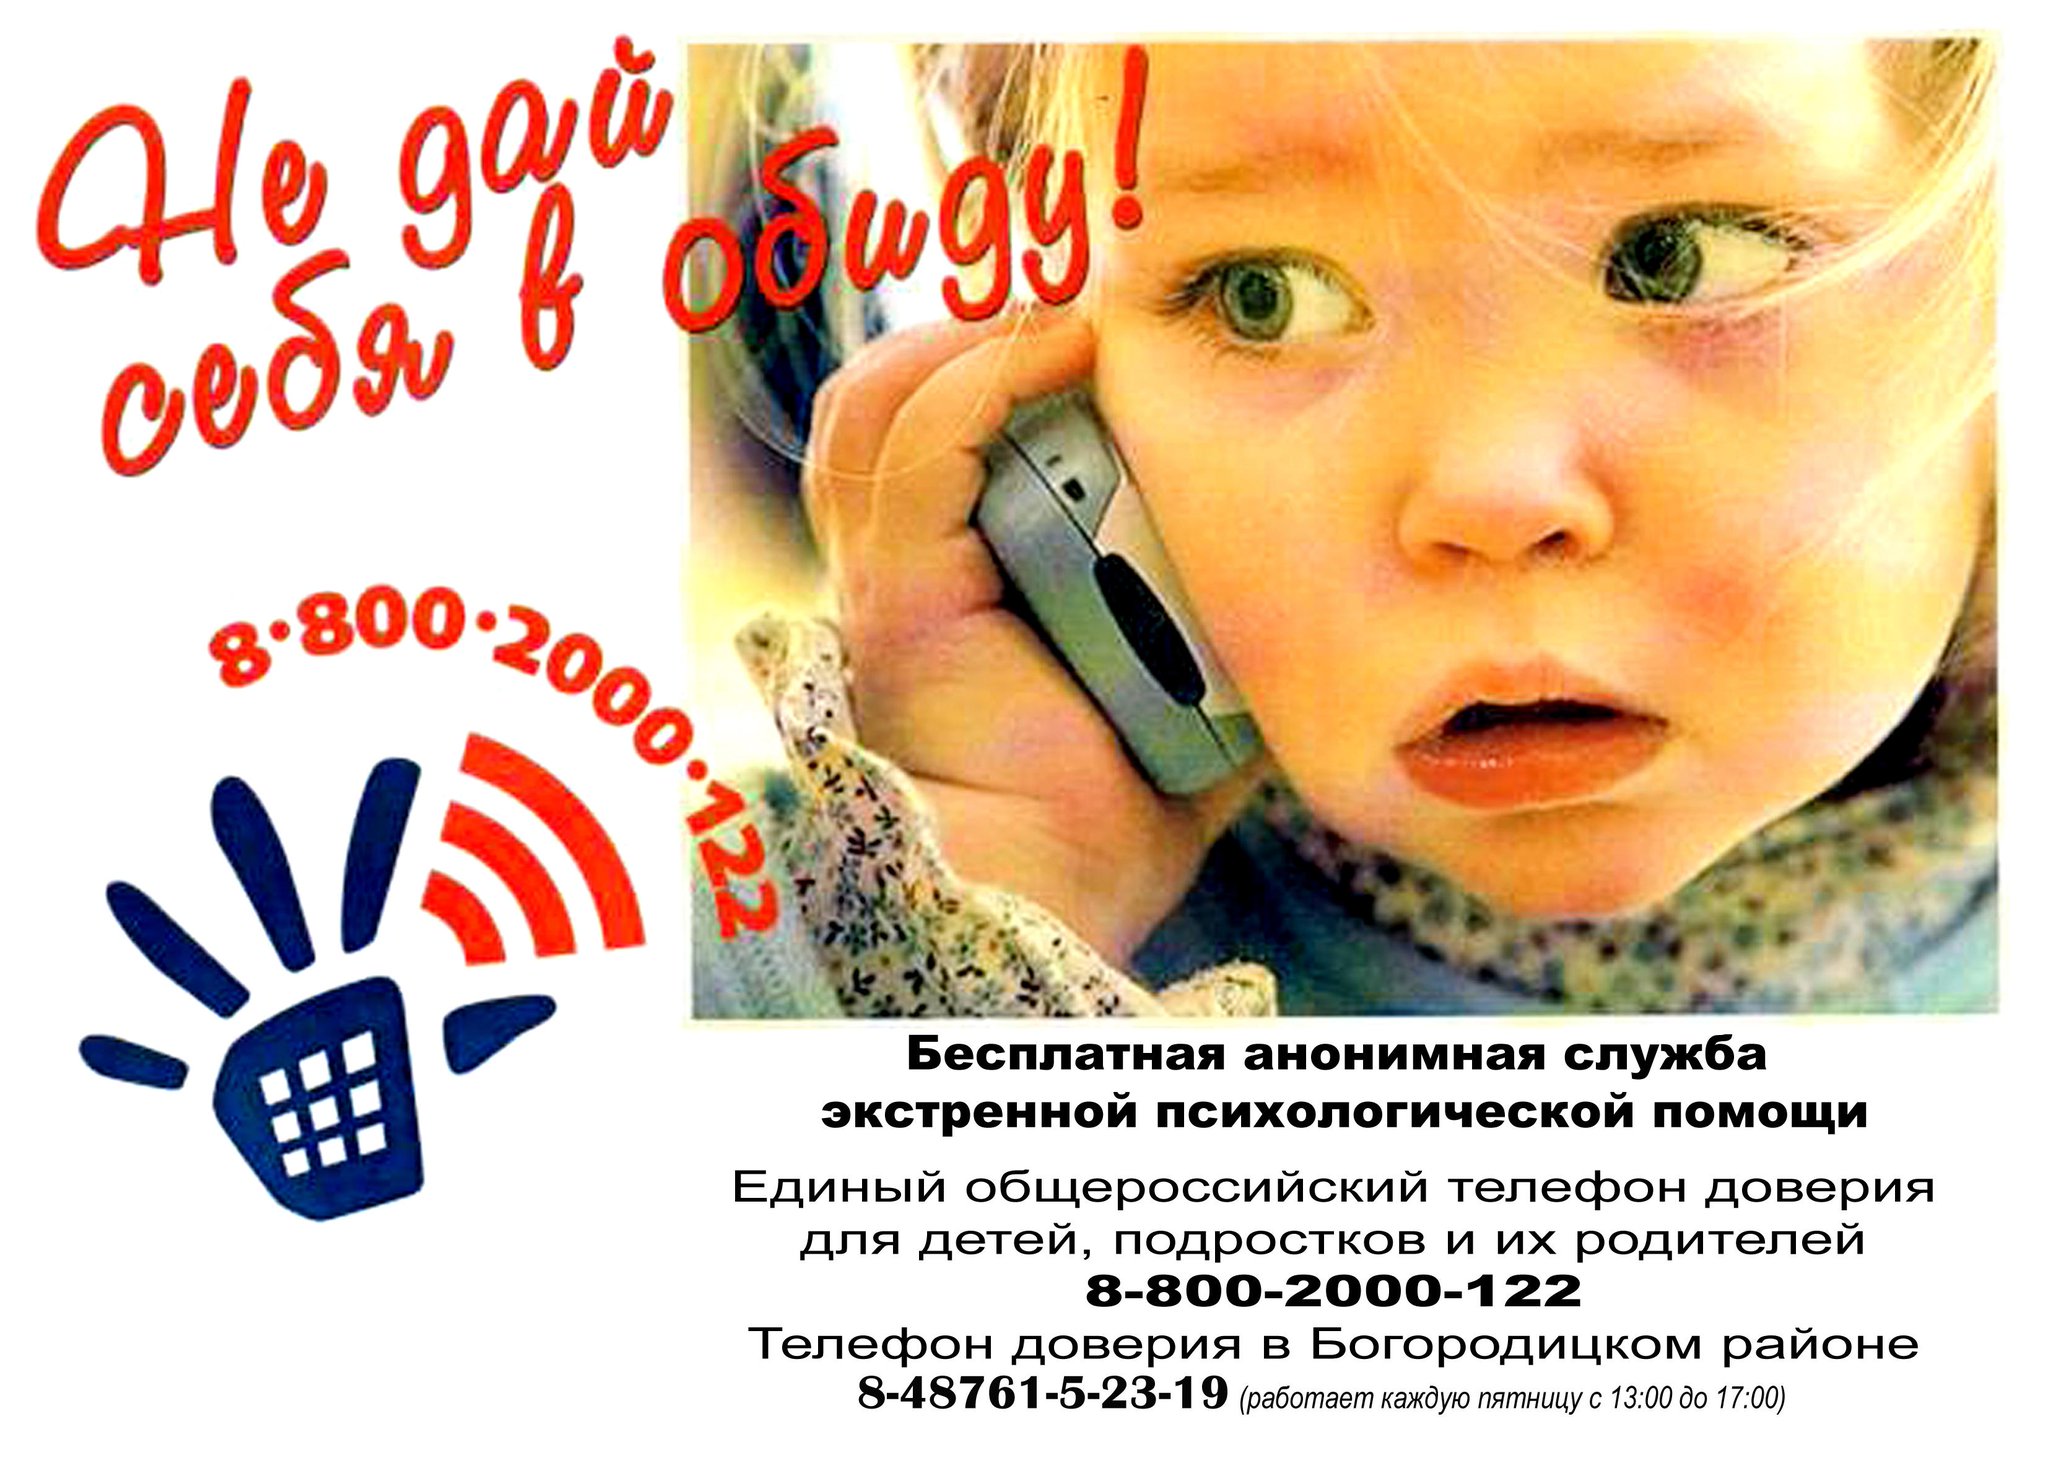 Телефон доверия форум. Единый детский телефон доверия 8-800-2000-122. Телефон доверия. Телефон доверия для детей. Детские телефоны доверия.